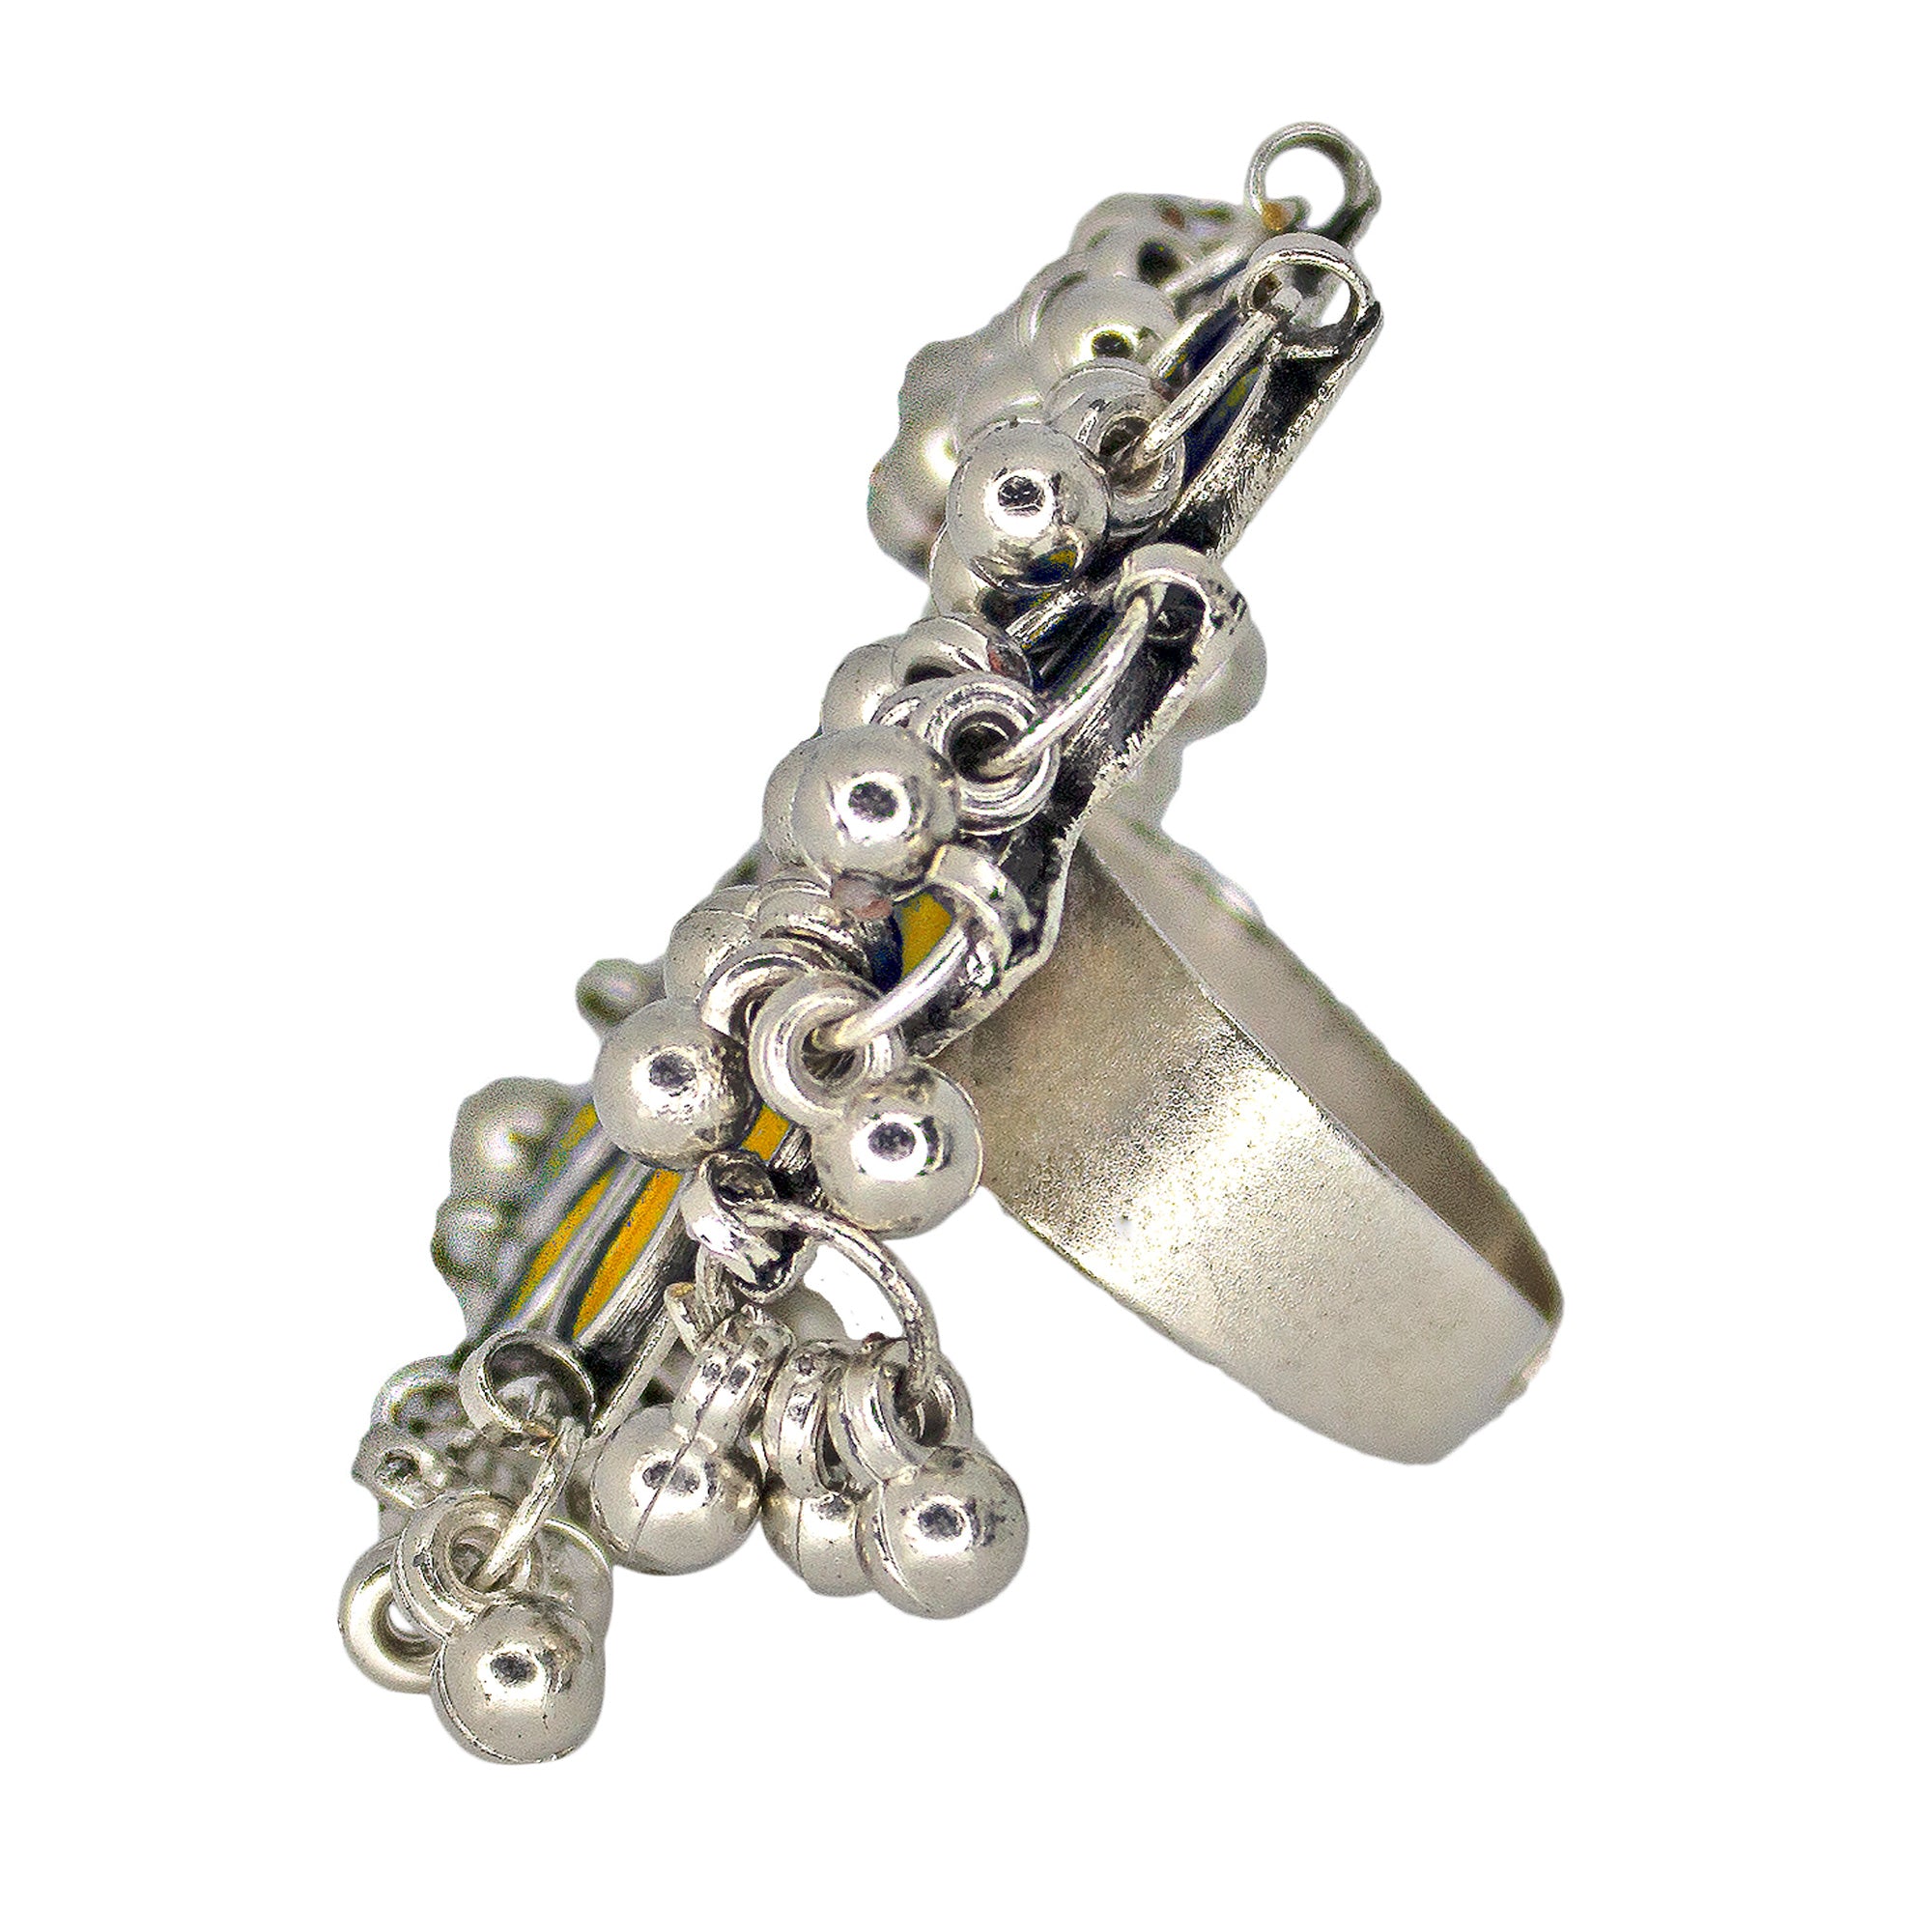 Abhinn Designer Silver Oxidised Floral Purple-Yellow Color Glass Premium Rings For Women